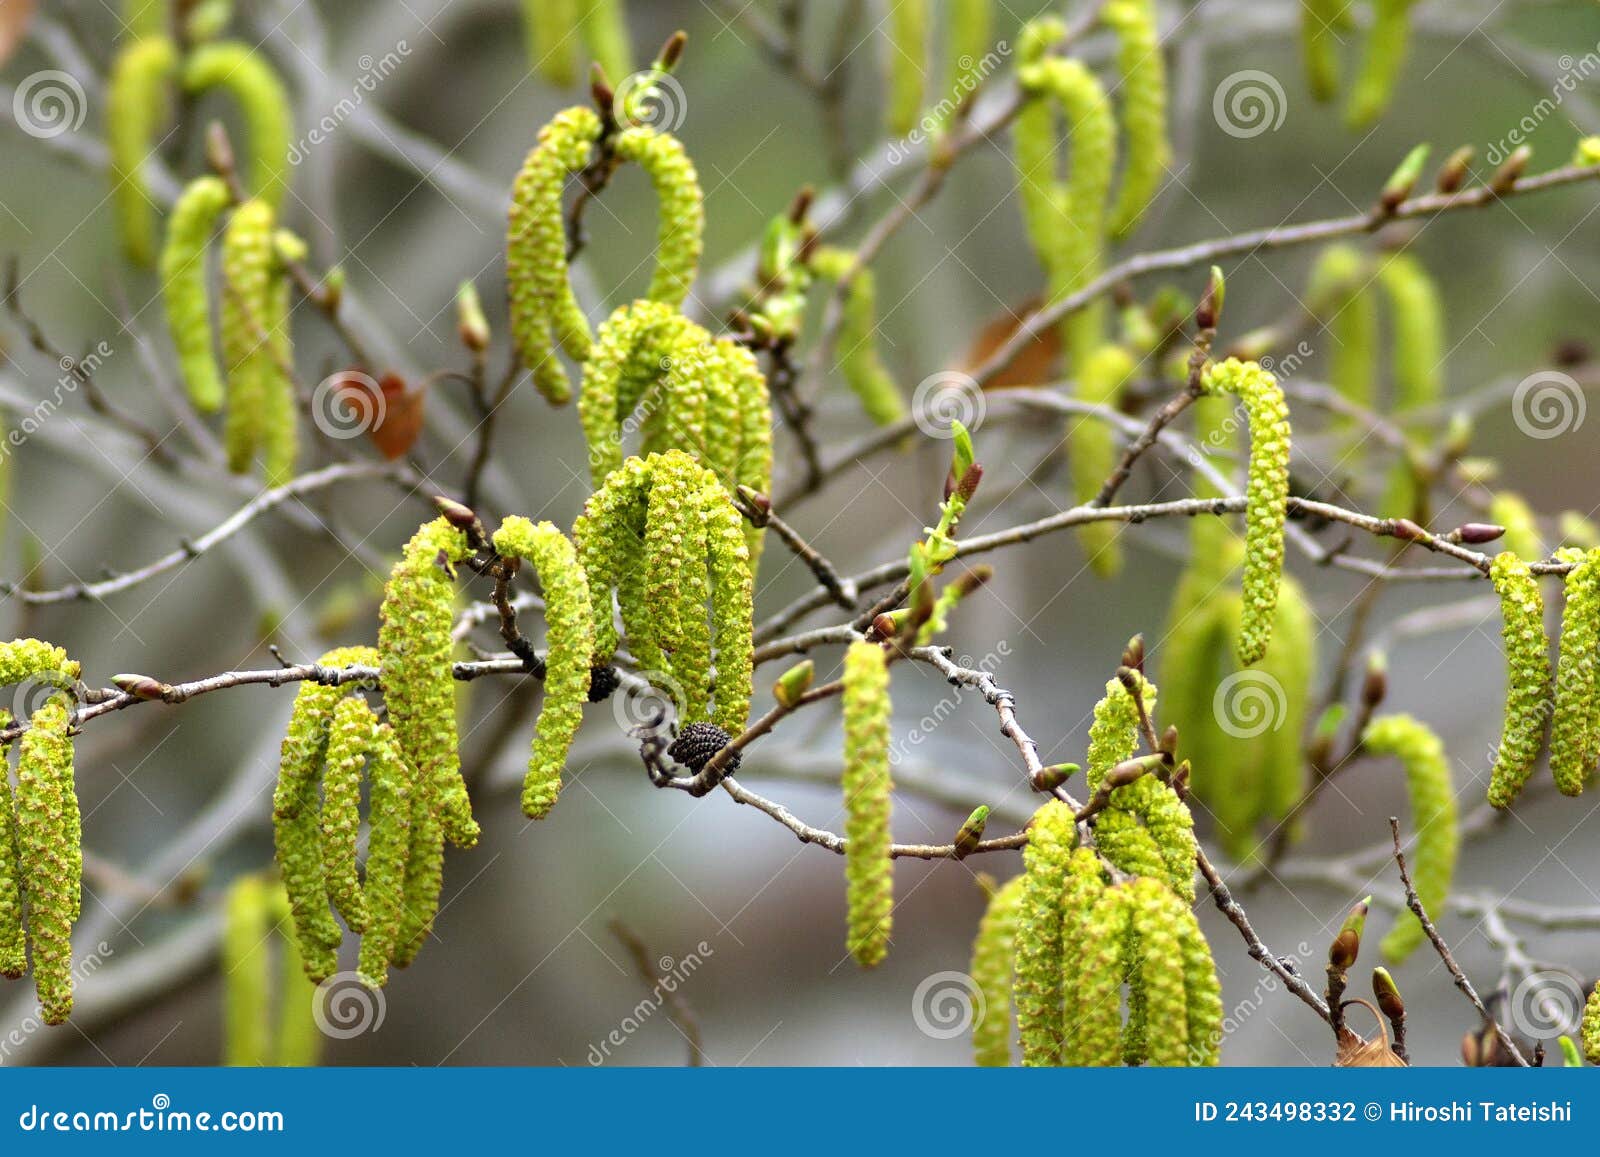 flowers of firma alder or asian alder or japanese green alder or alnus firma in spring